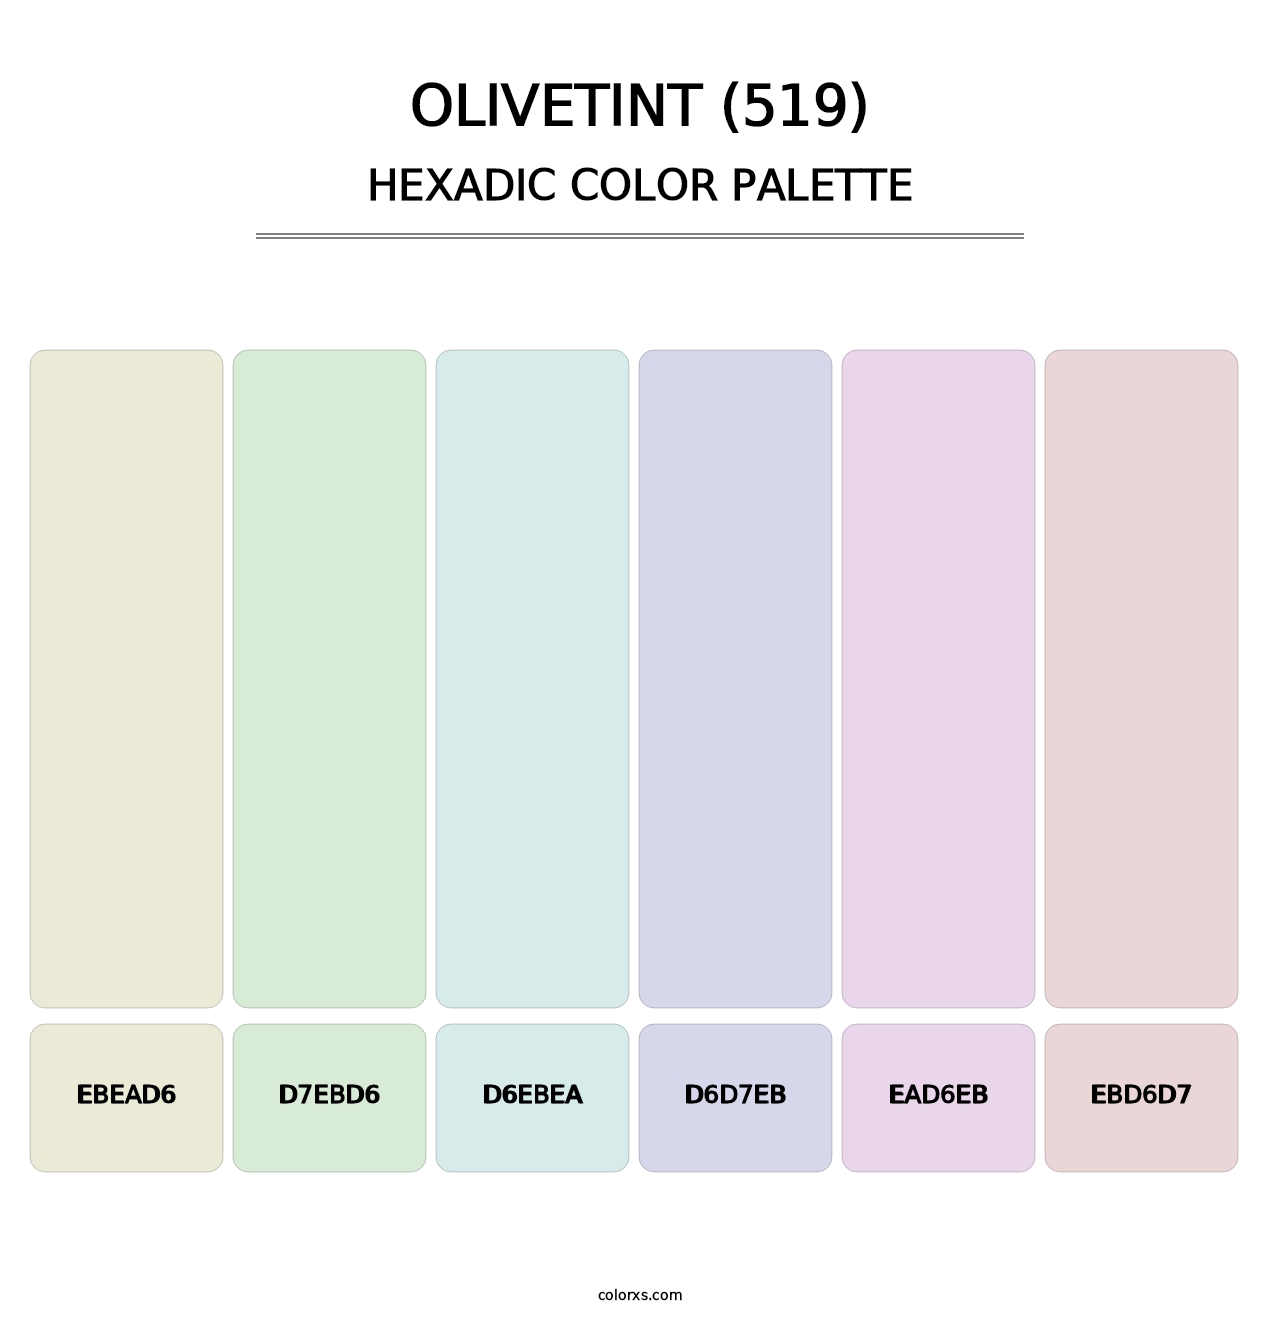 Olivetint (519) - Hexadic Color Palette